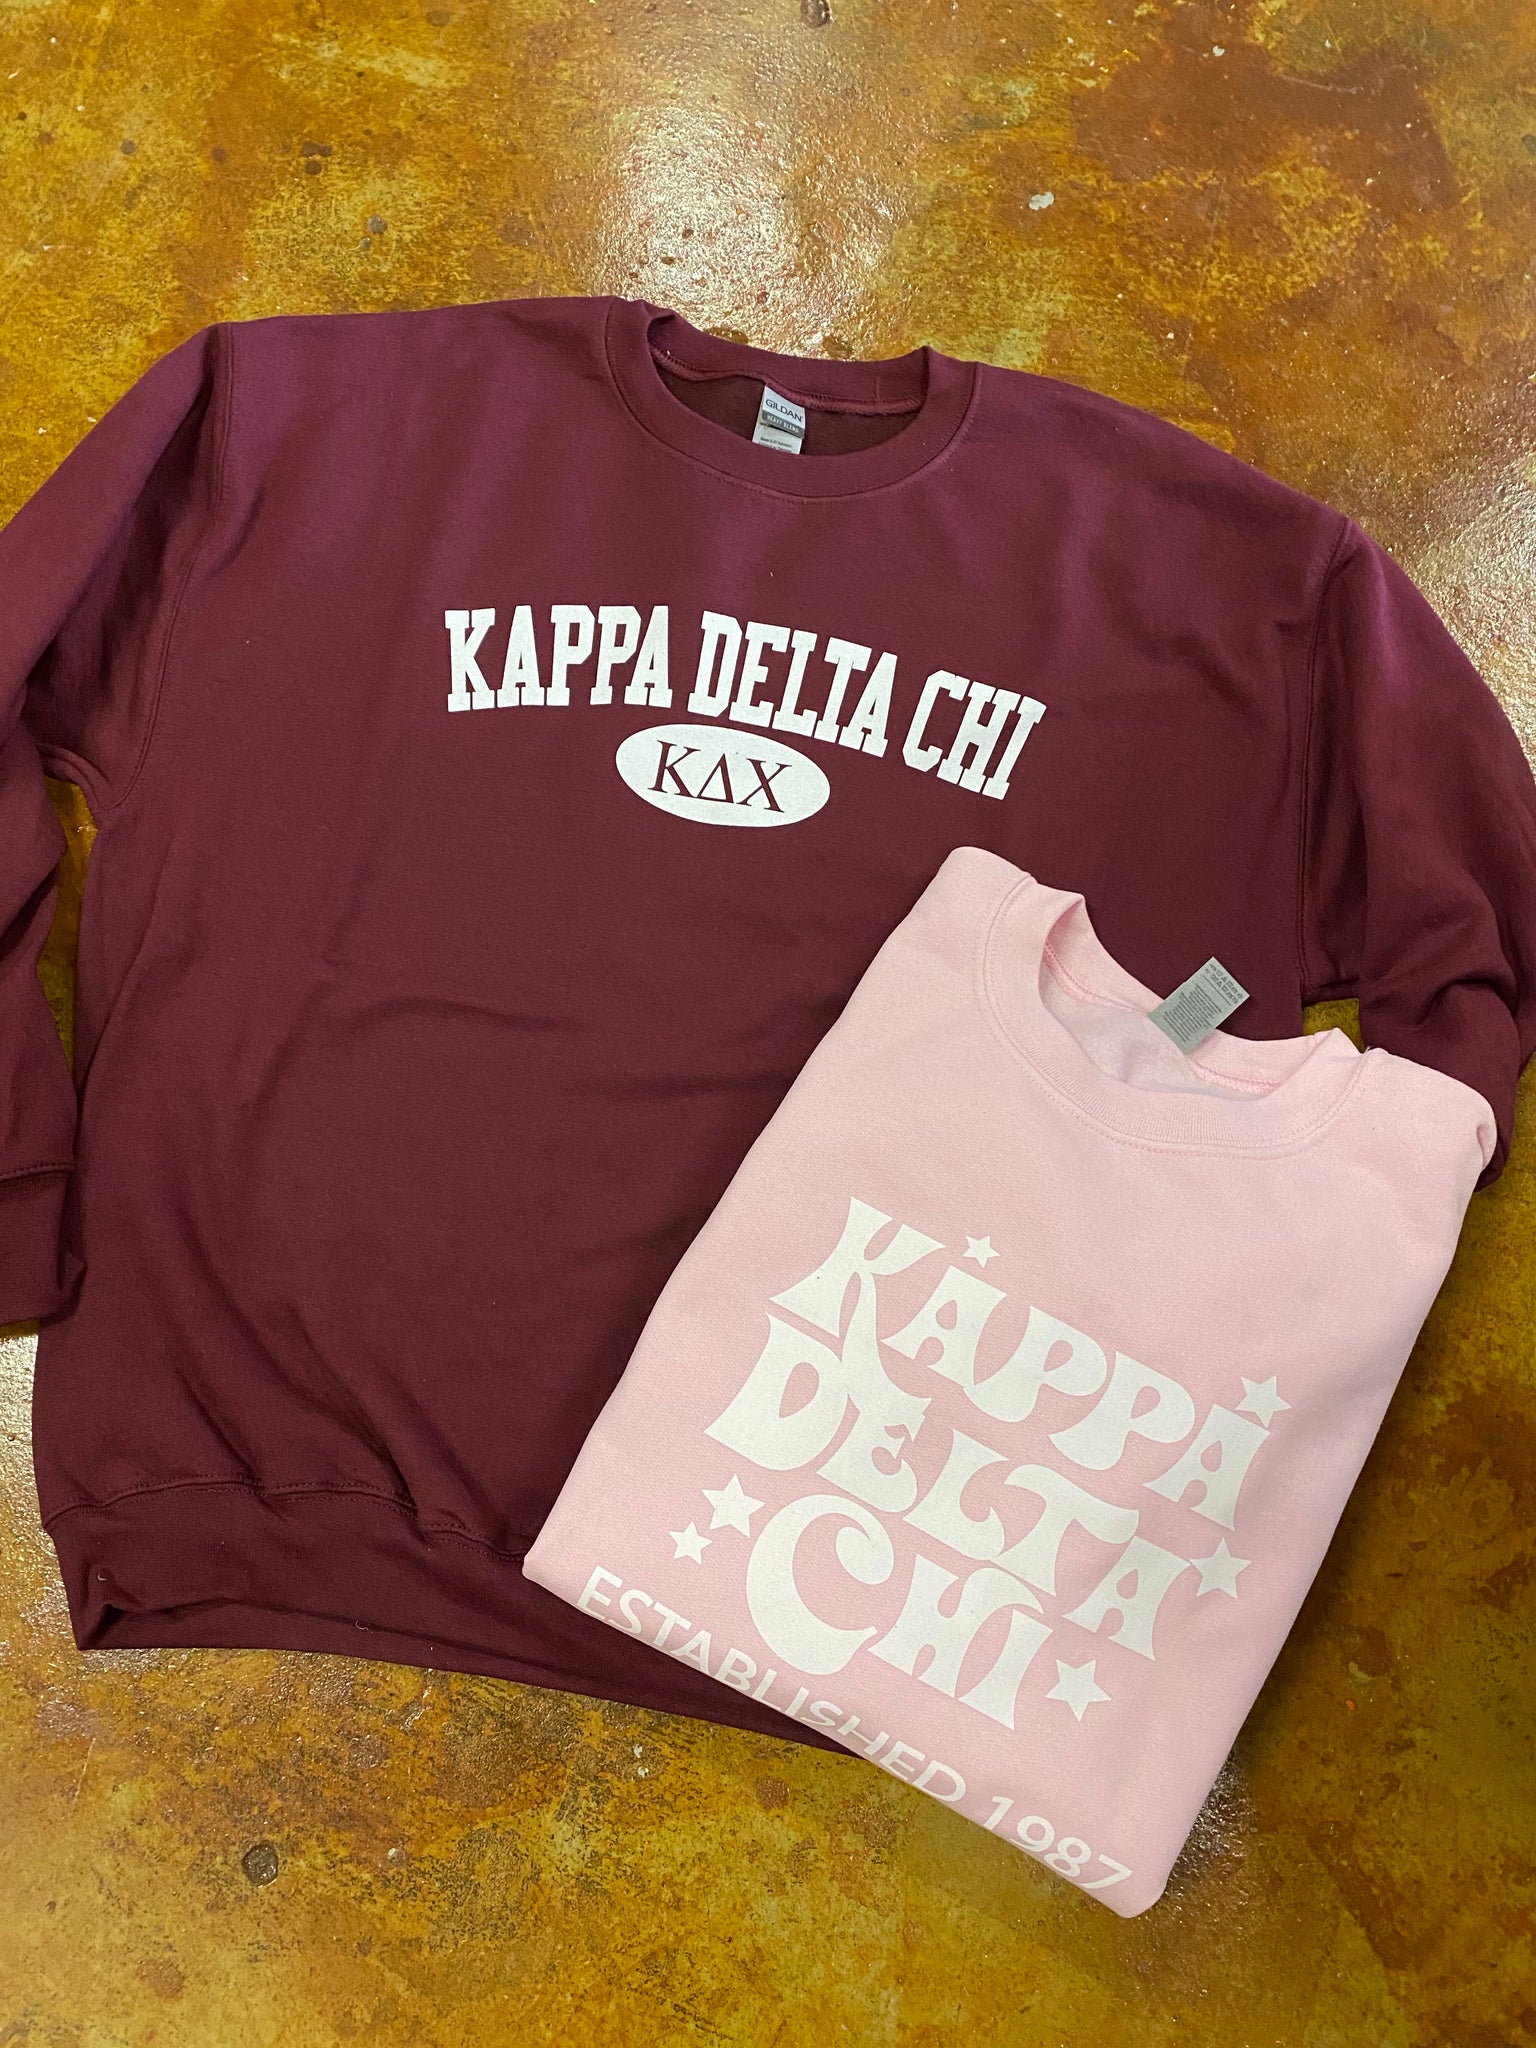 Kappa Delta Chi - Sweatshirt